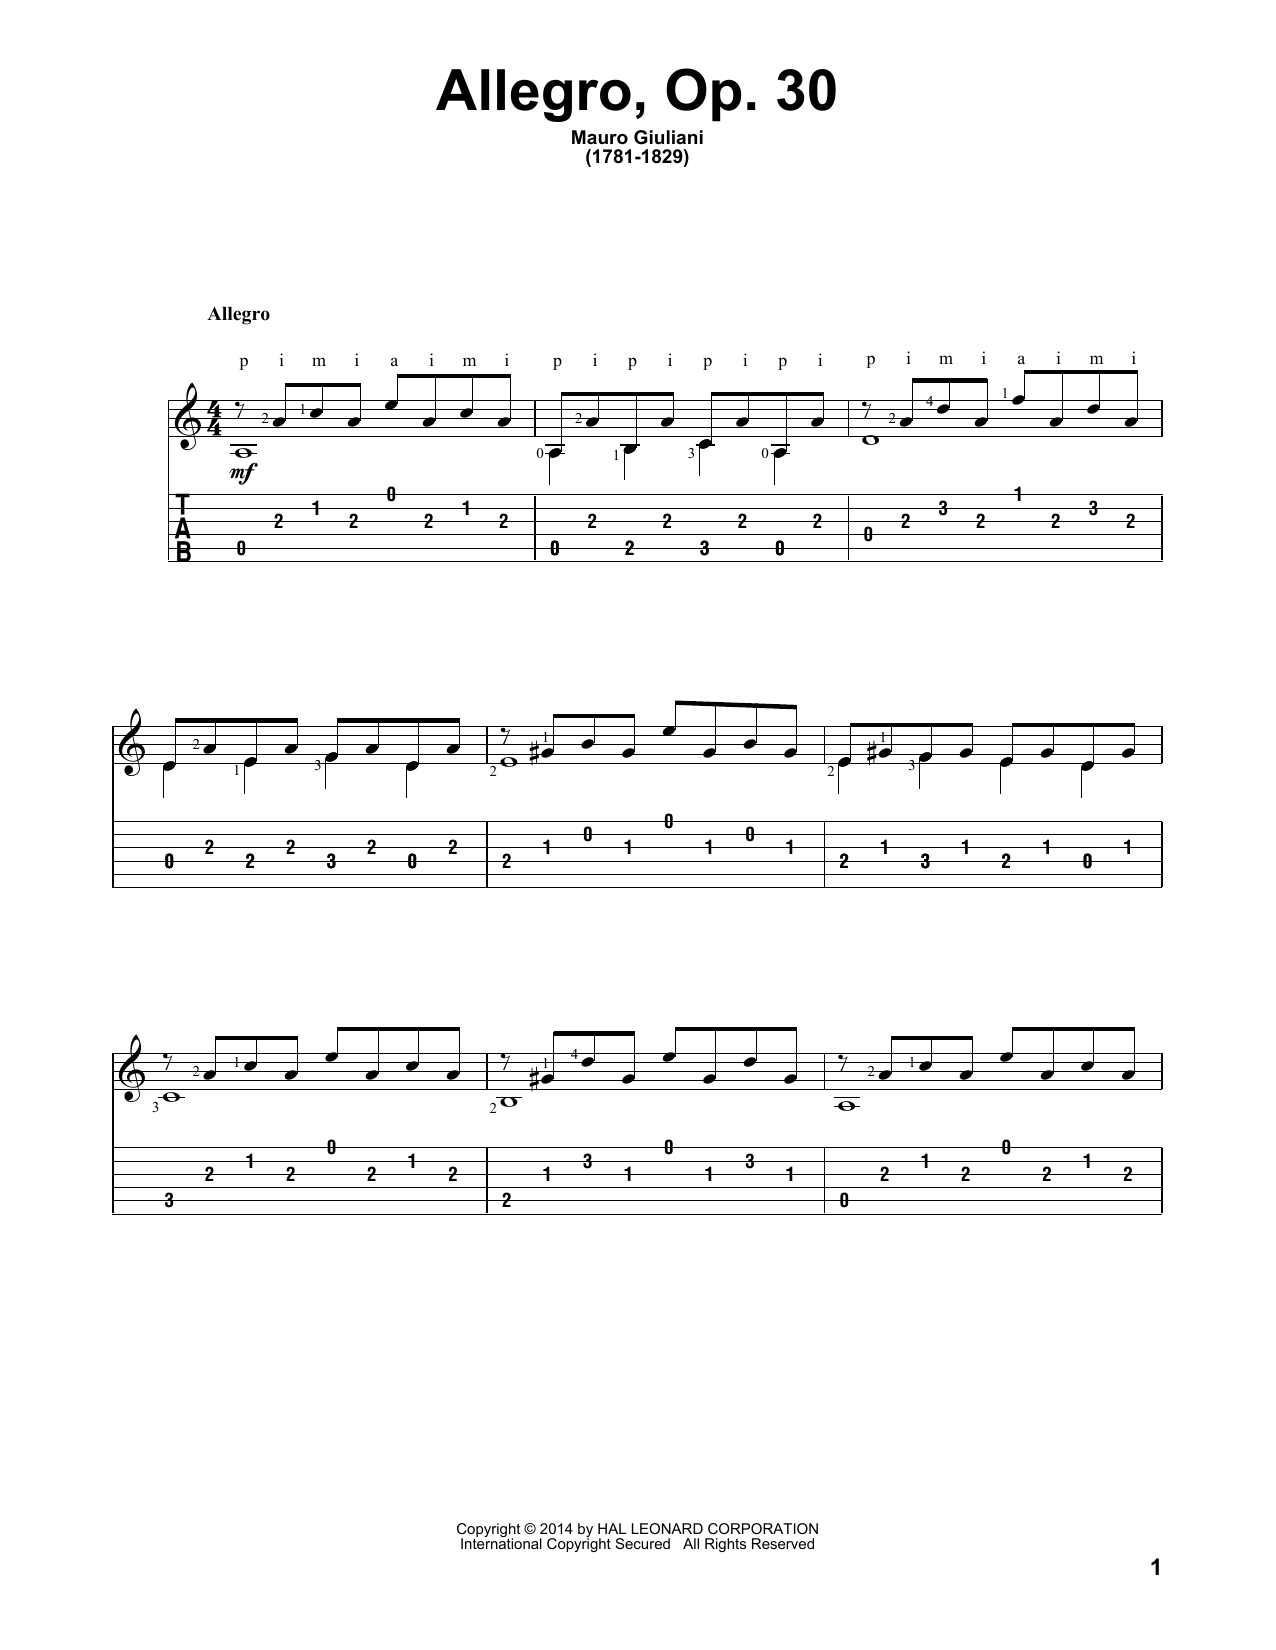 John Hill Allegro Op. 30 Sheet Music Notes & Chords for Guitar Tab - Download or Print PDF